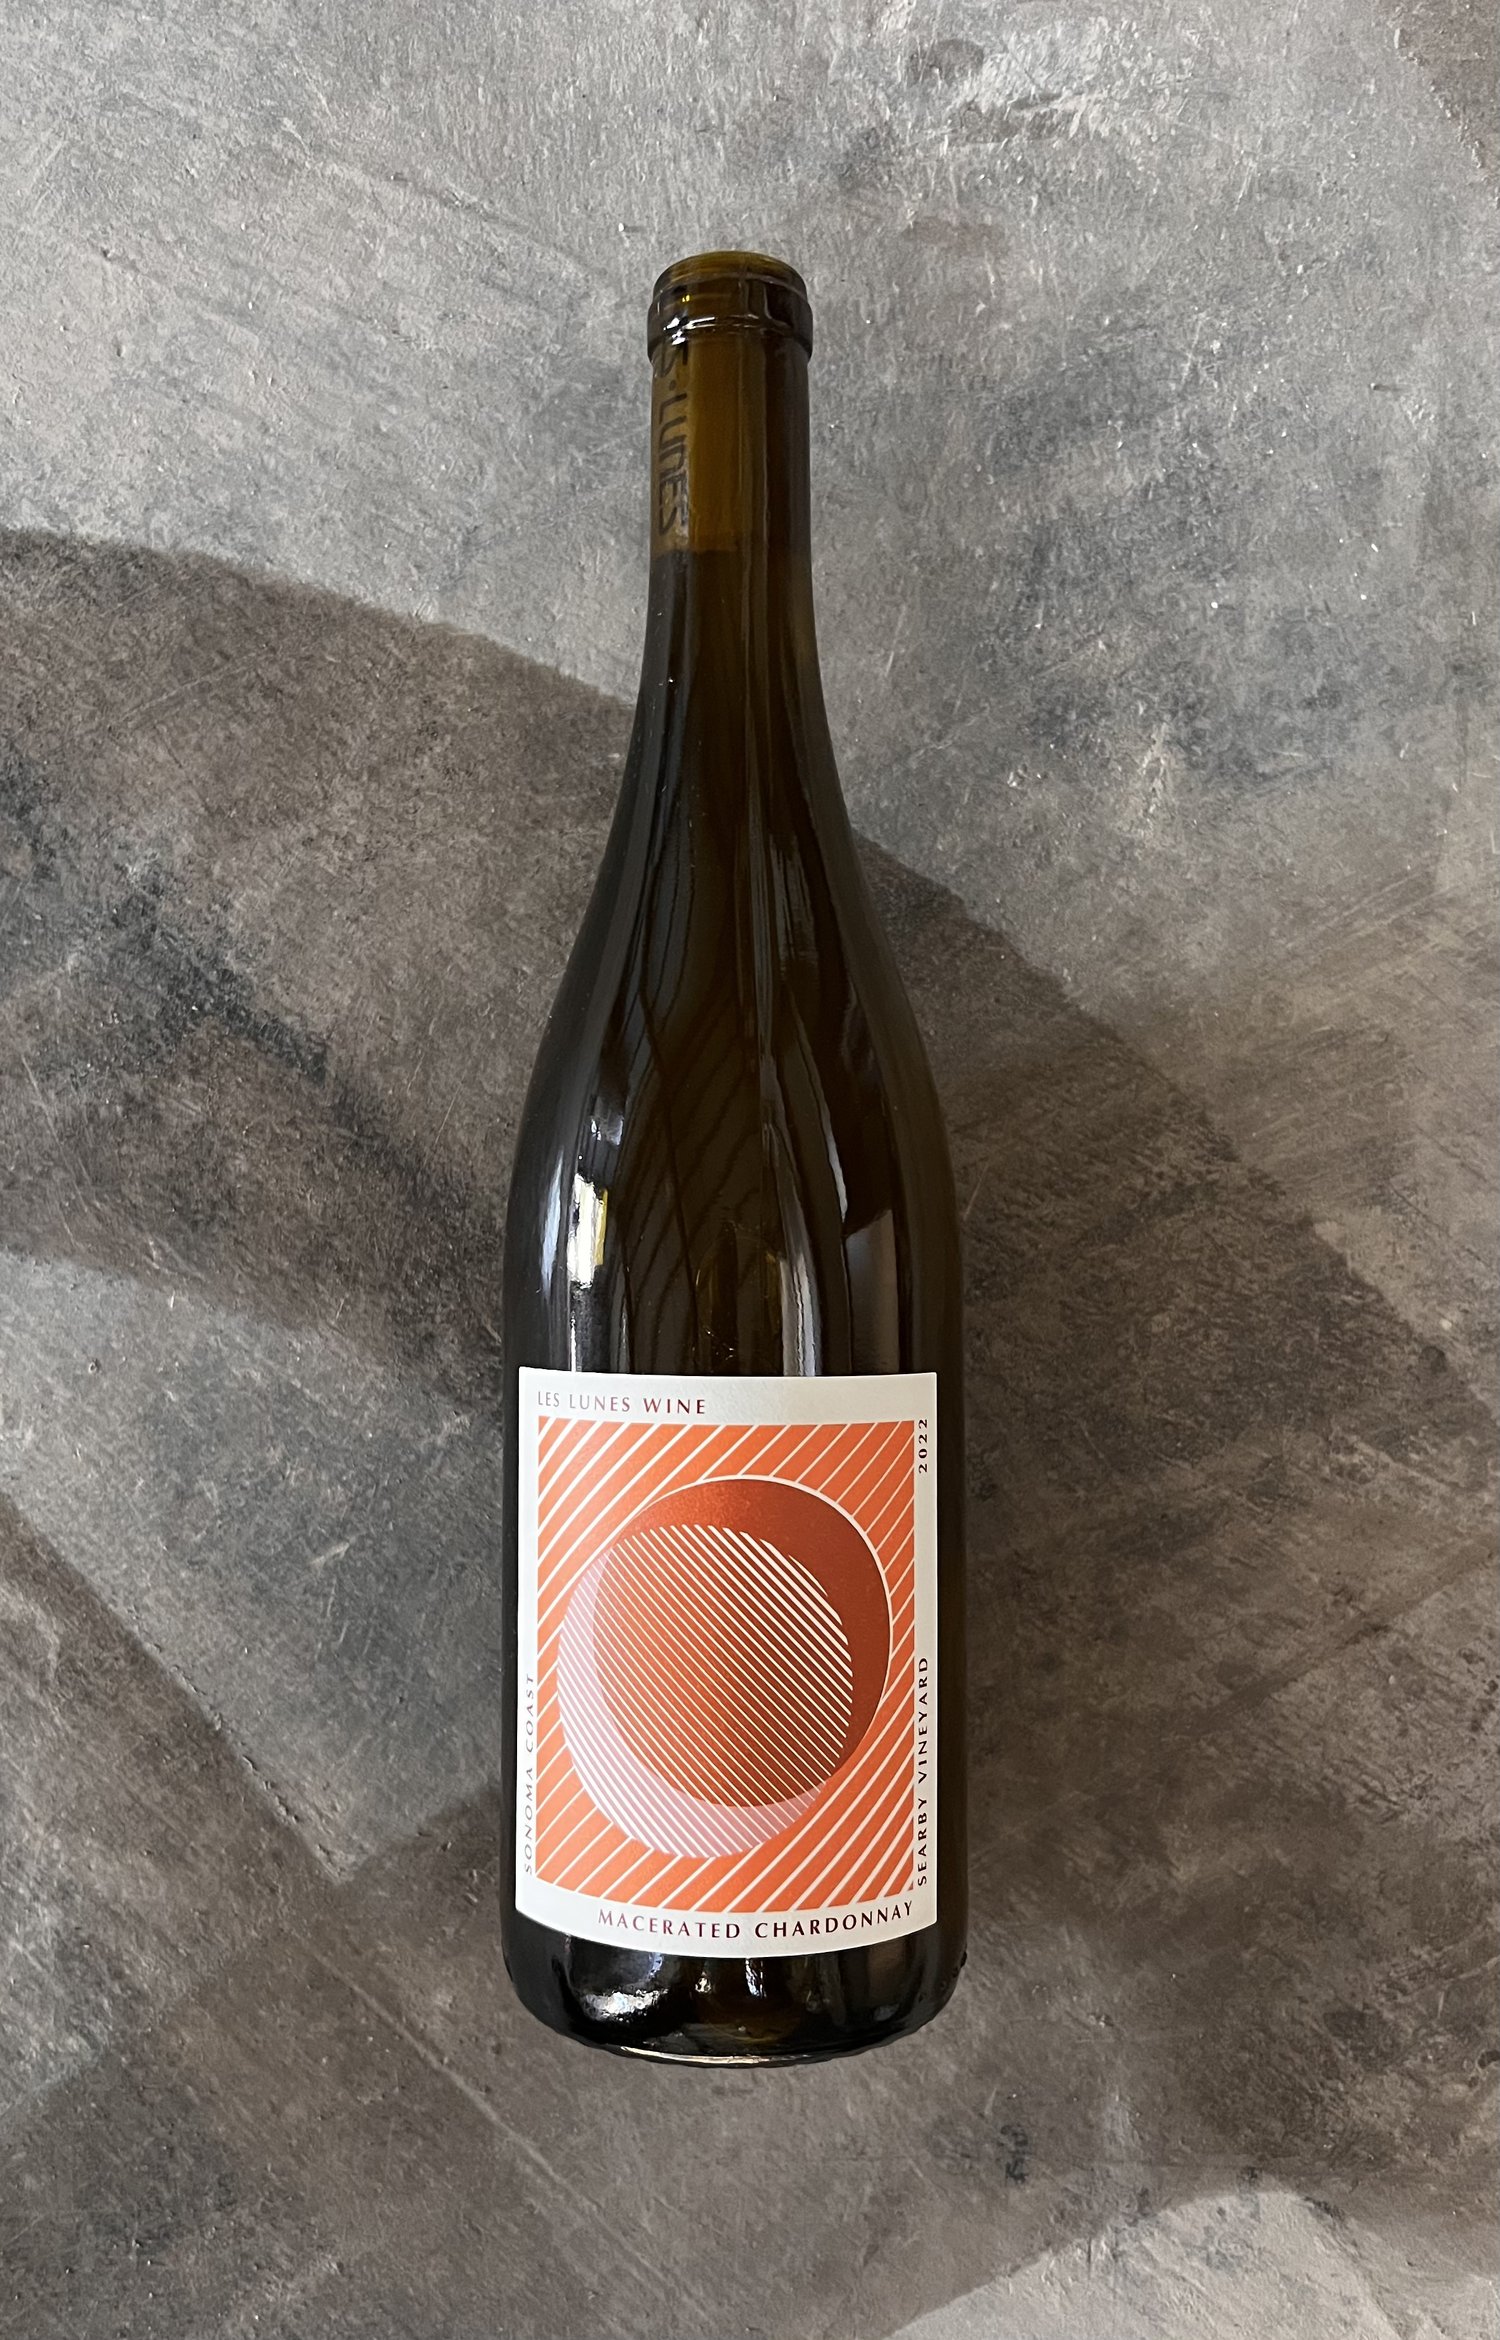 2022 Les Lunes Searby Macerated Chardonnay Sonoma Coast AVA — Les Lunes Wine